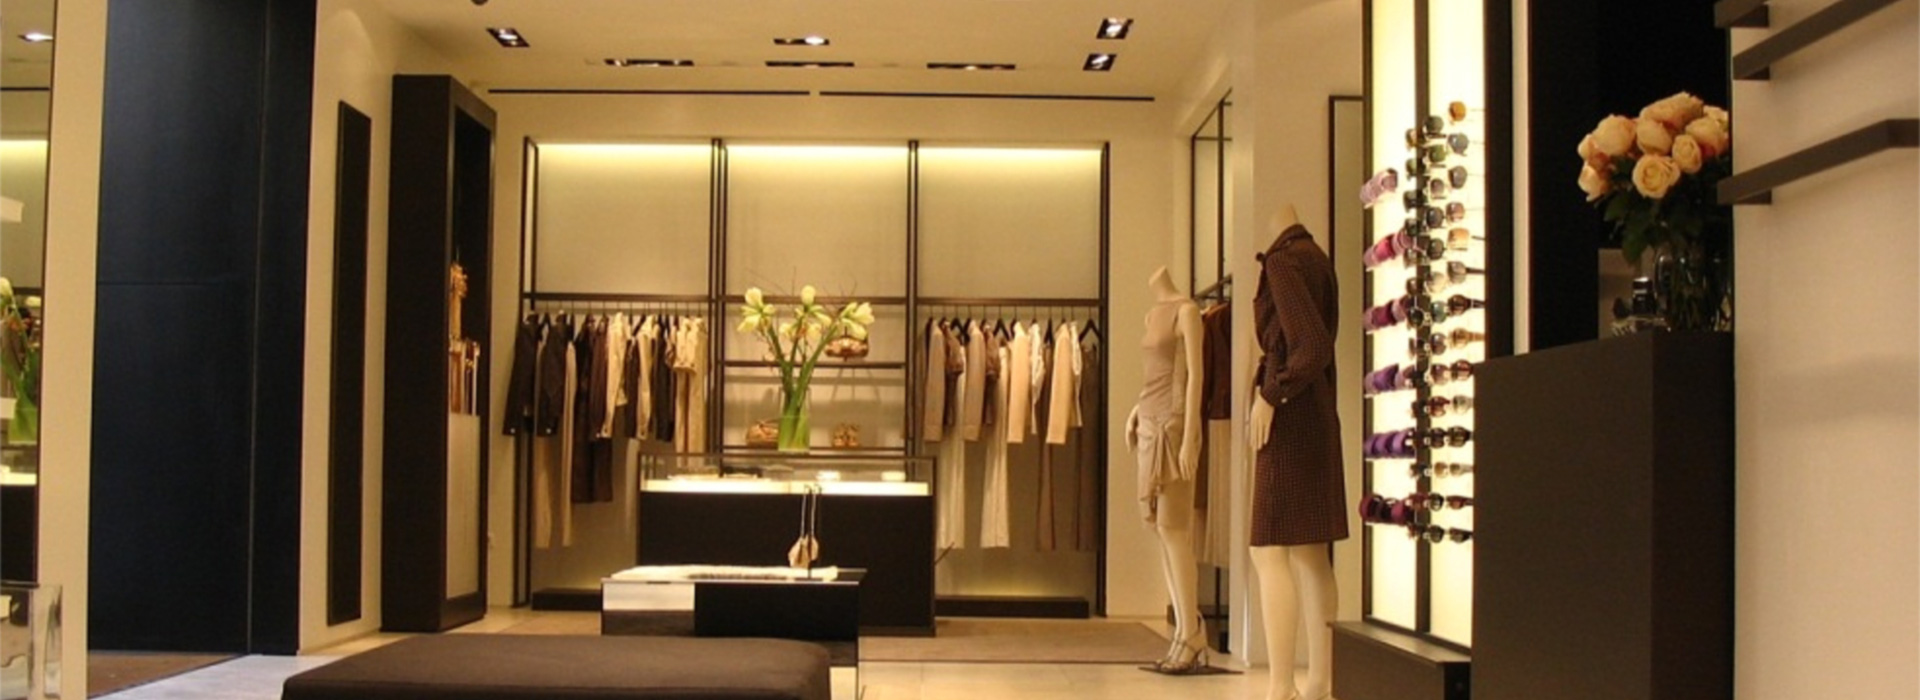 HCSdesign Fashion Shops